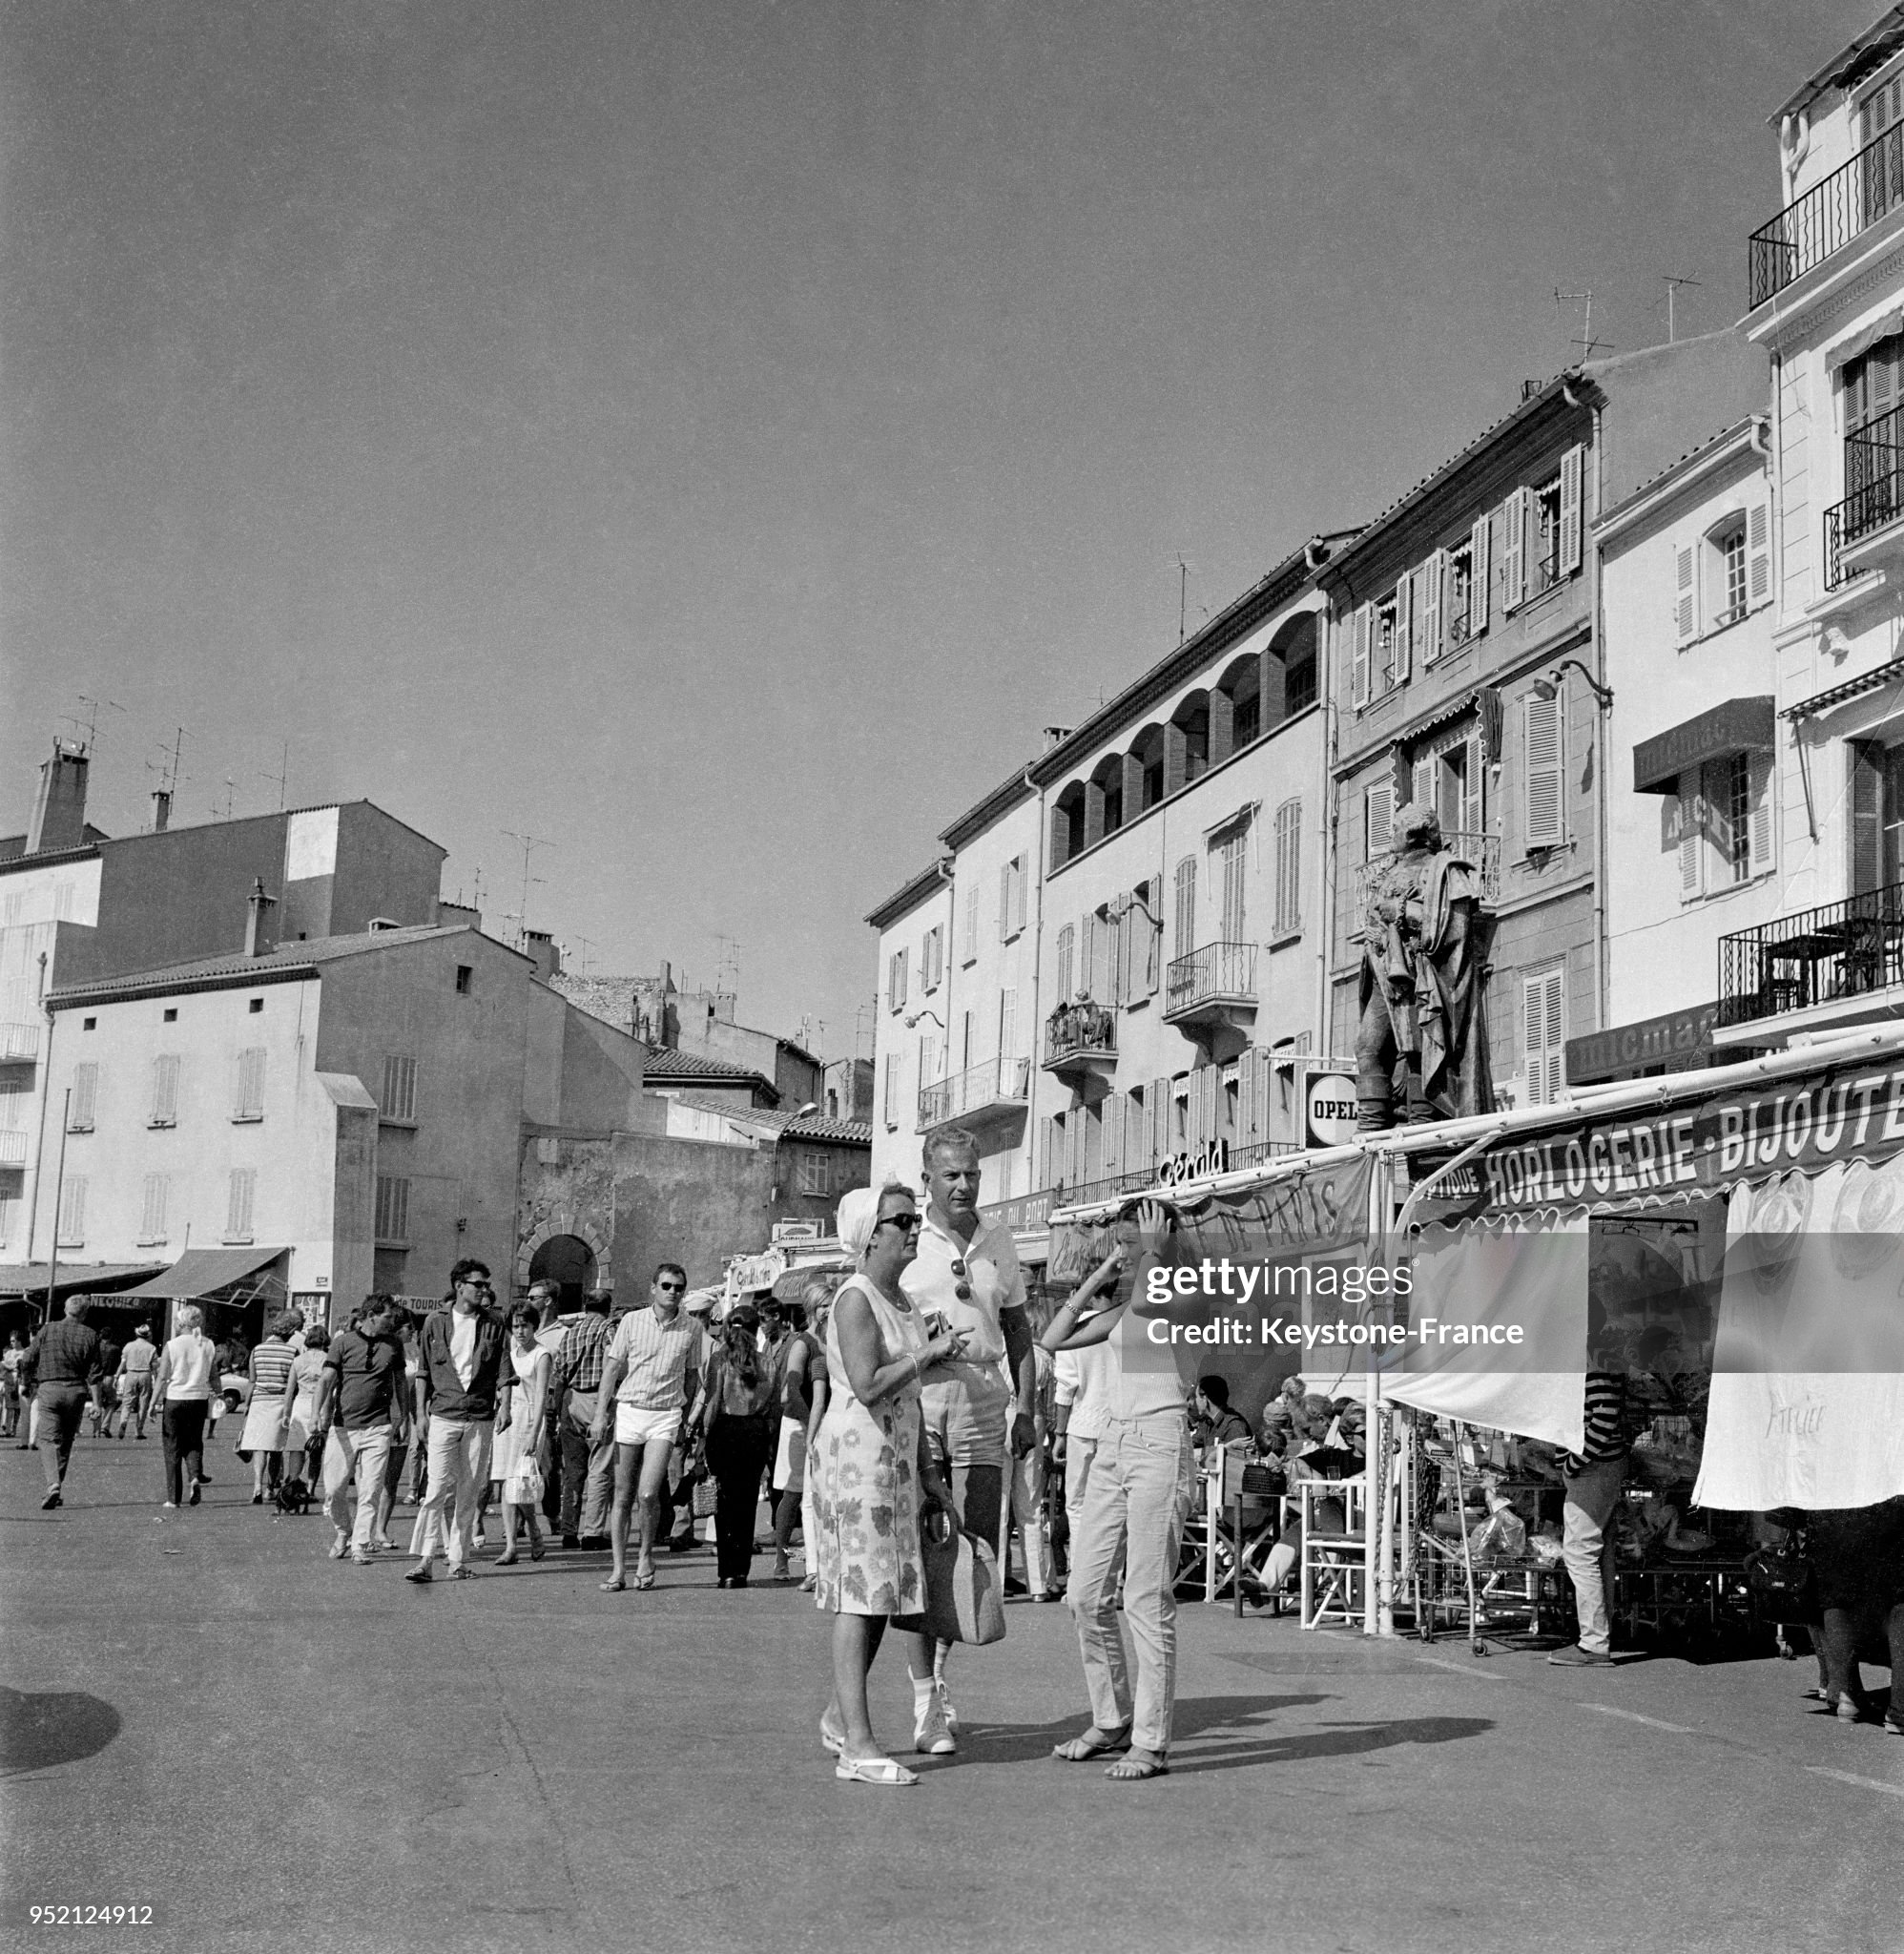 Street scene on the port of Saint-Tropez in 1950s. 